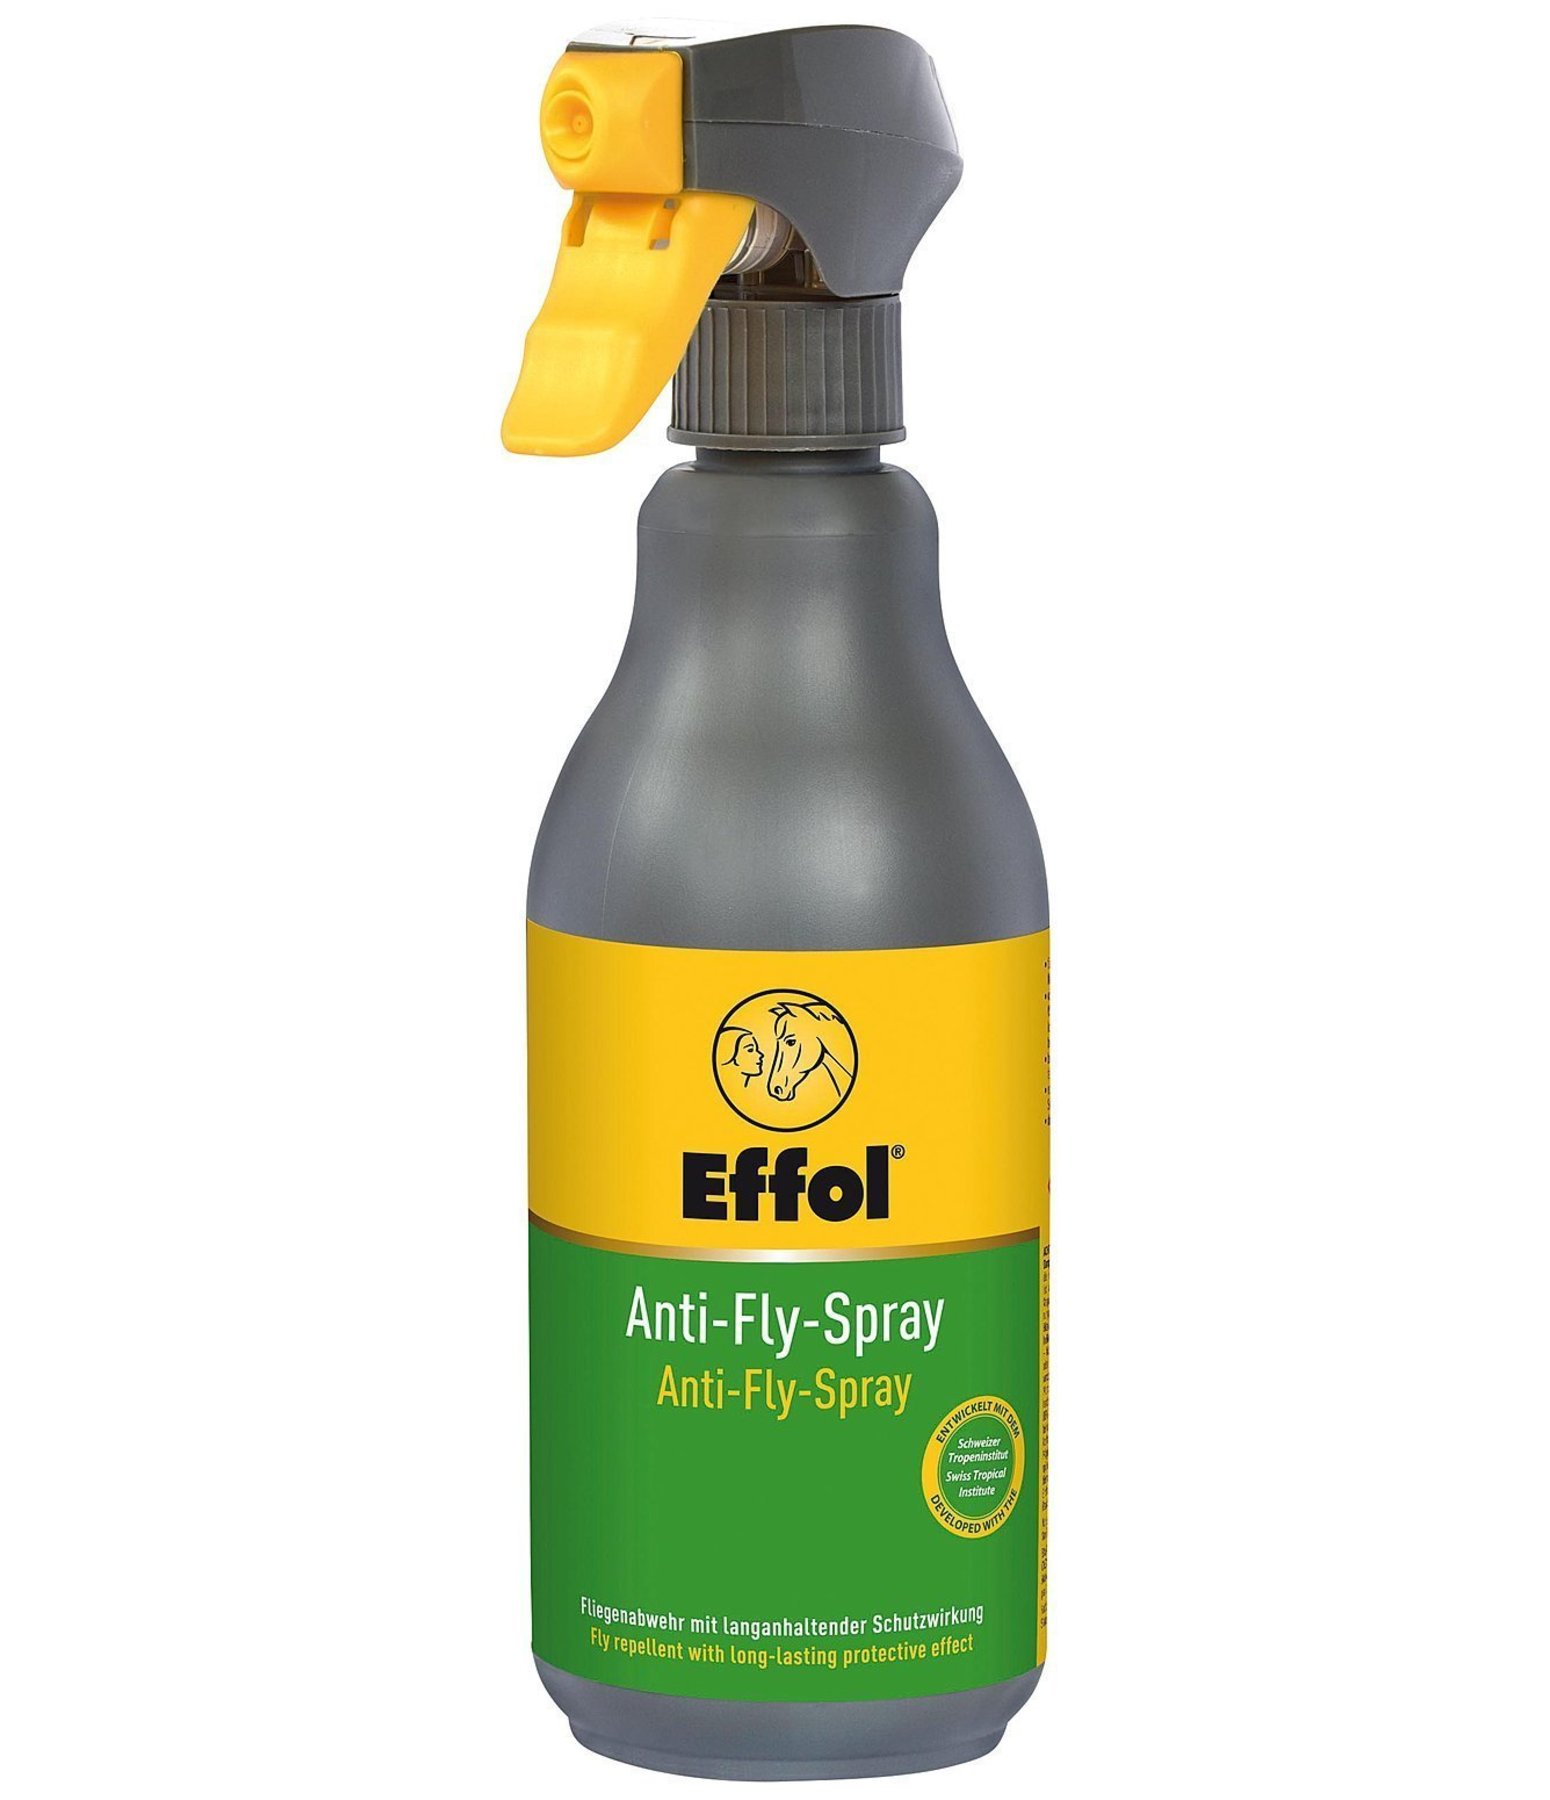 Anti-Fly-Spray